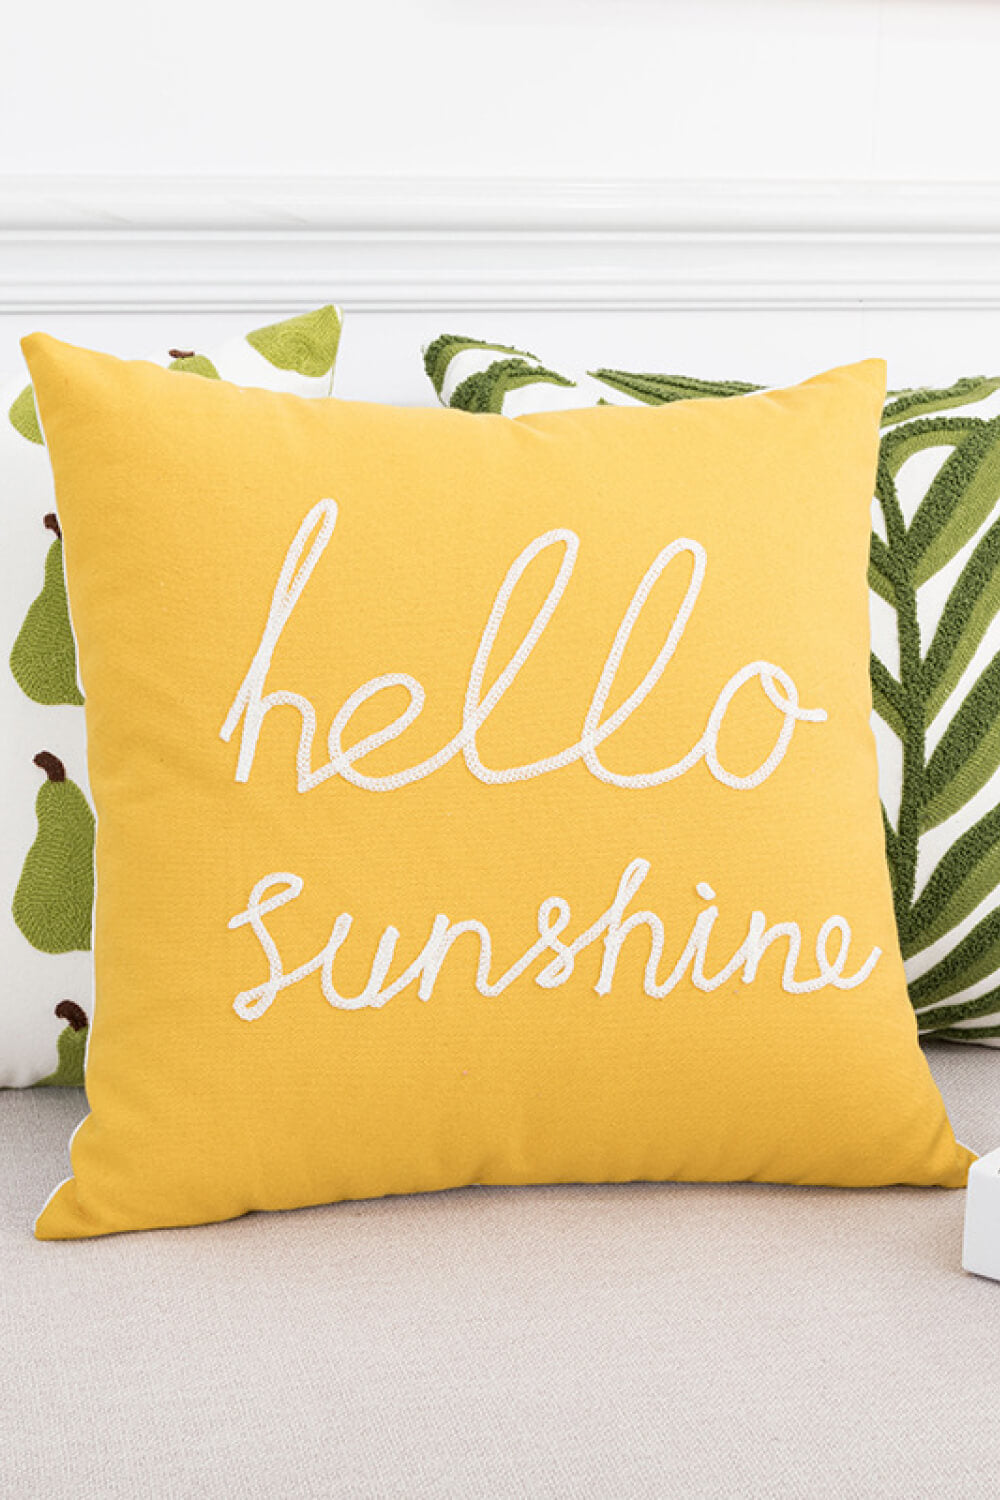 Hello Sunshine Punch-Needle Decorative Throw Pillow Case